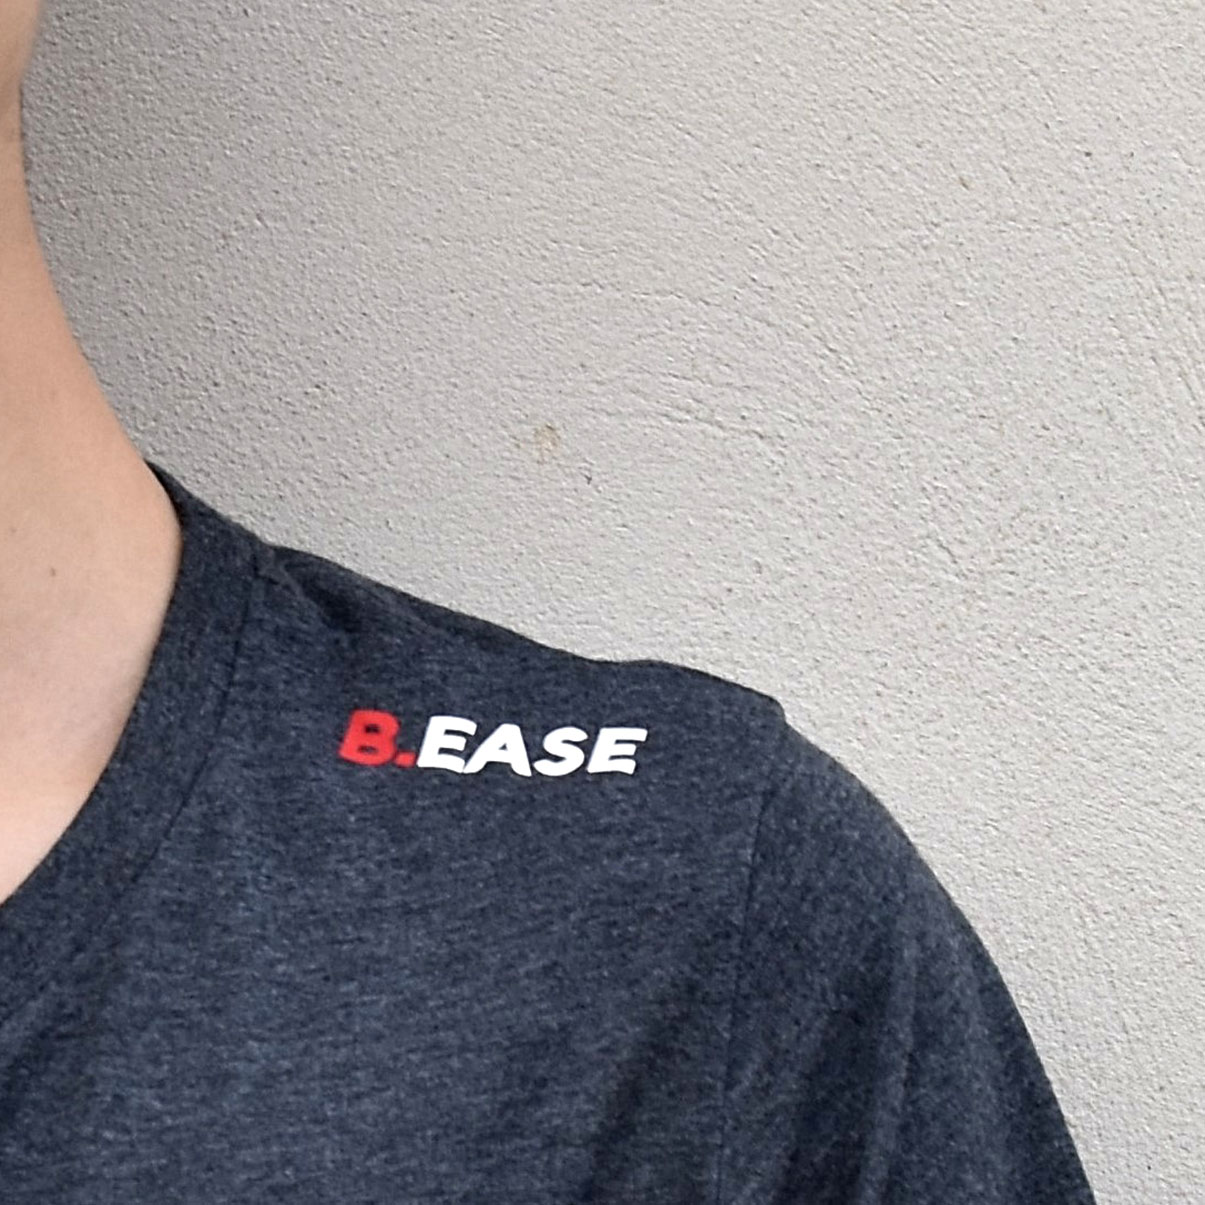 bease-3